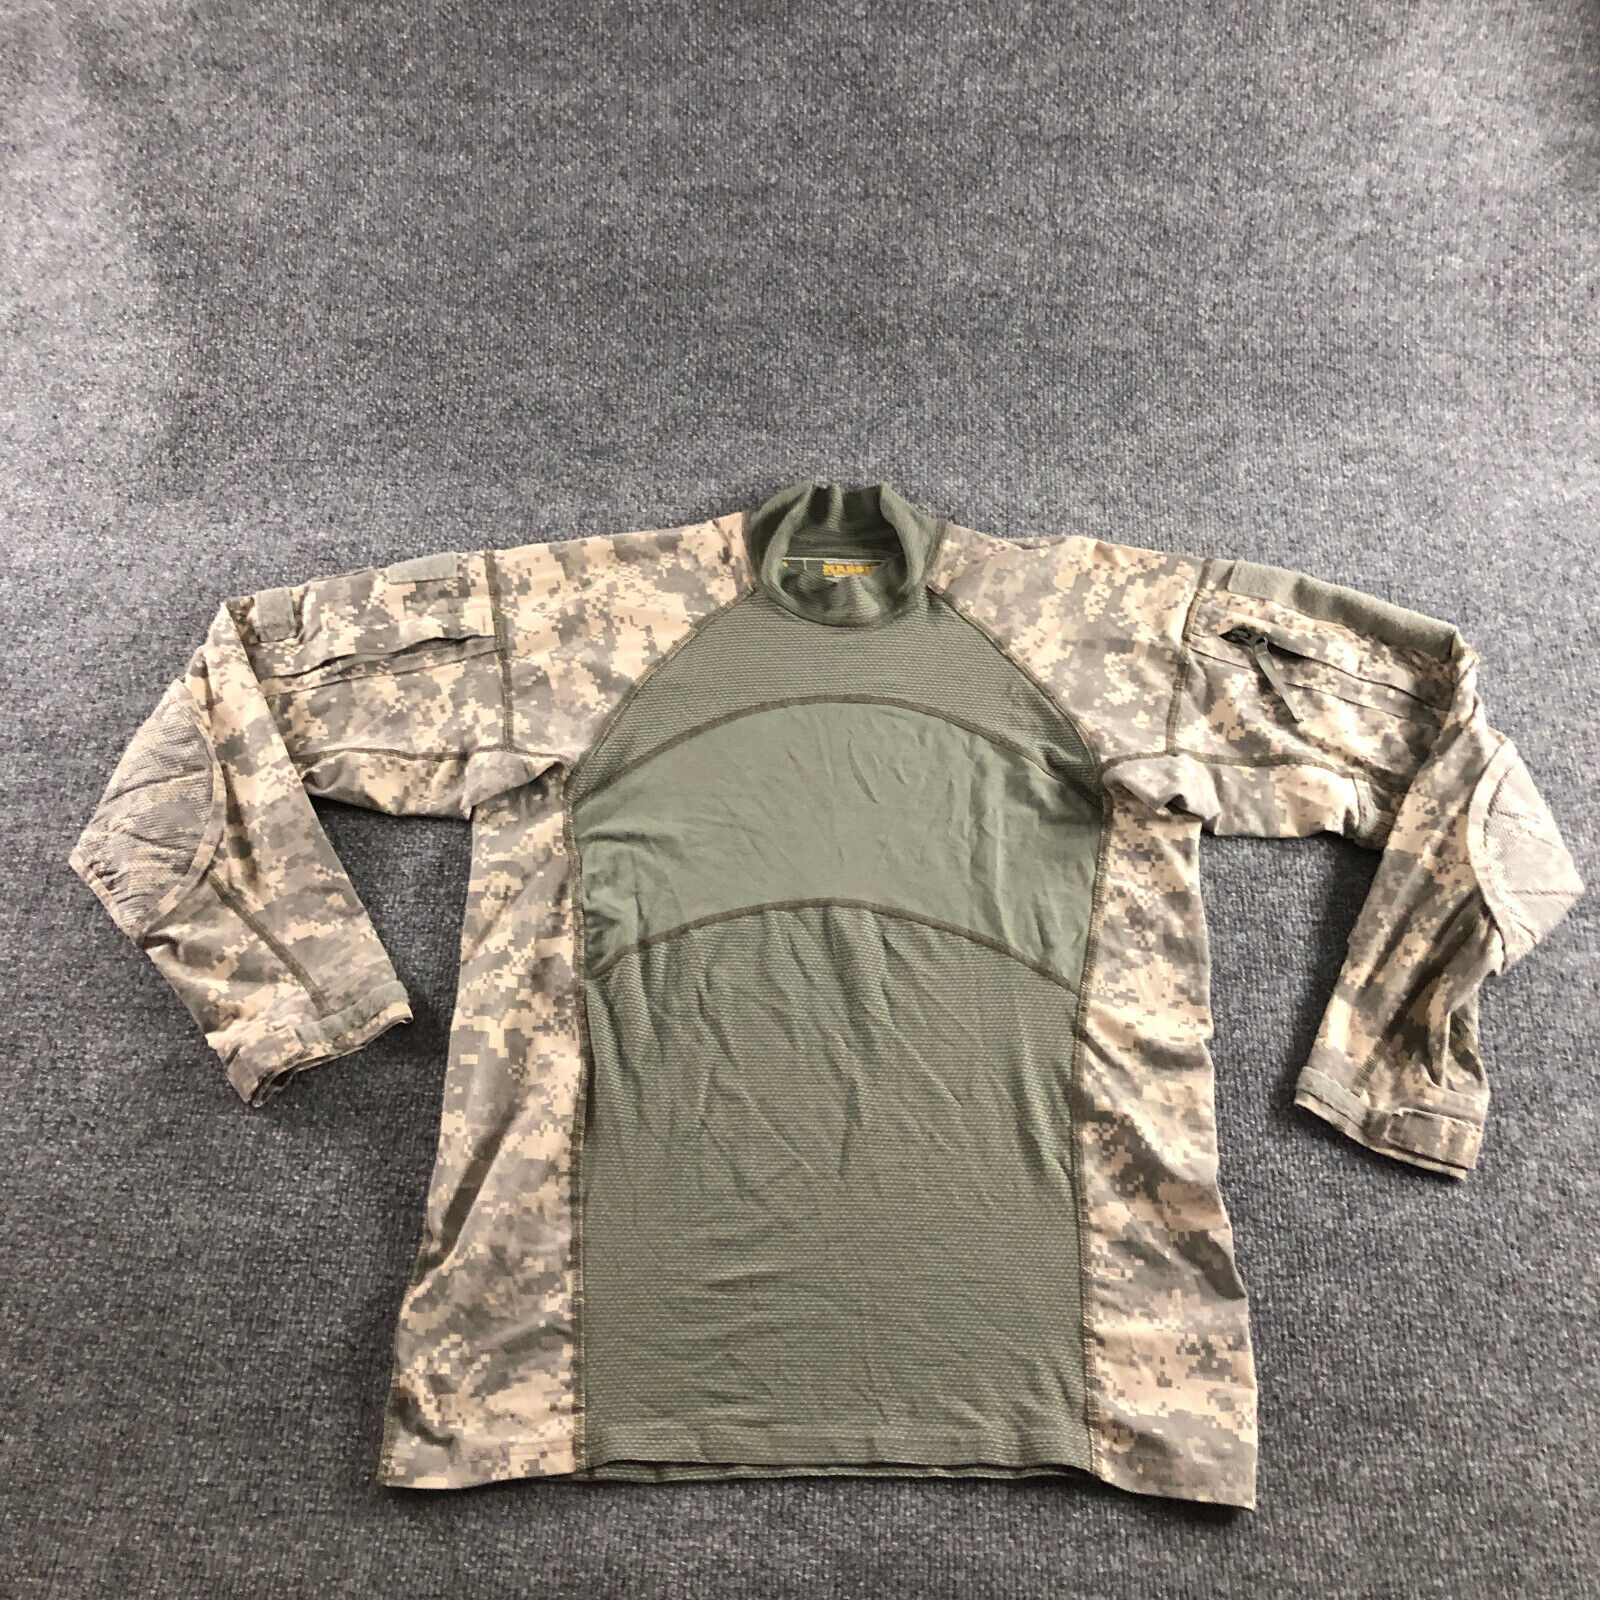 Massif Army Combat Digital Camo Shirt Mens L Green Tan Long Sleeve Zip Pockets